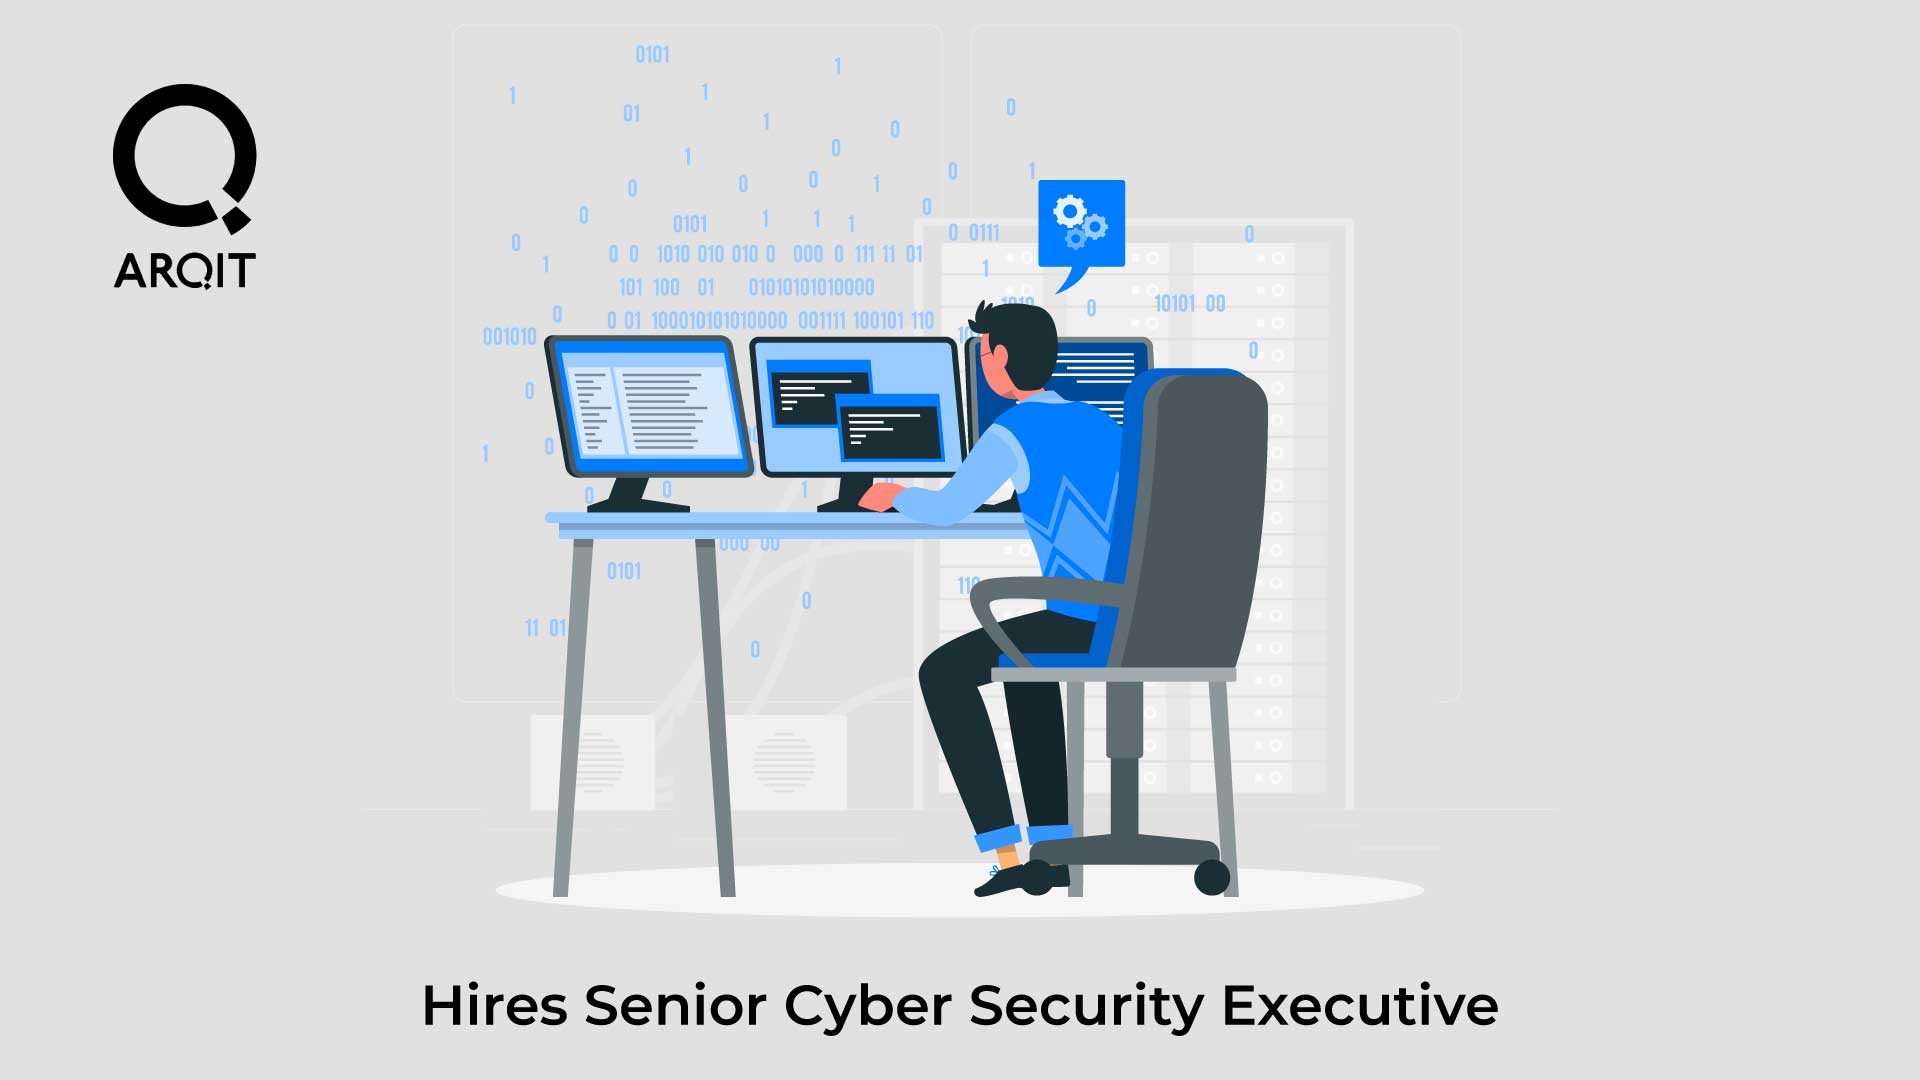 Arqit hires senior cyber security executive